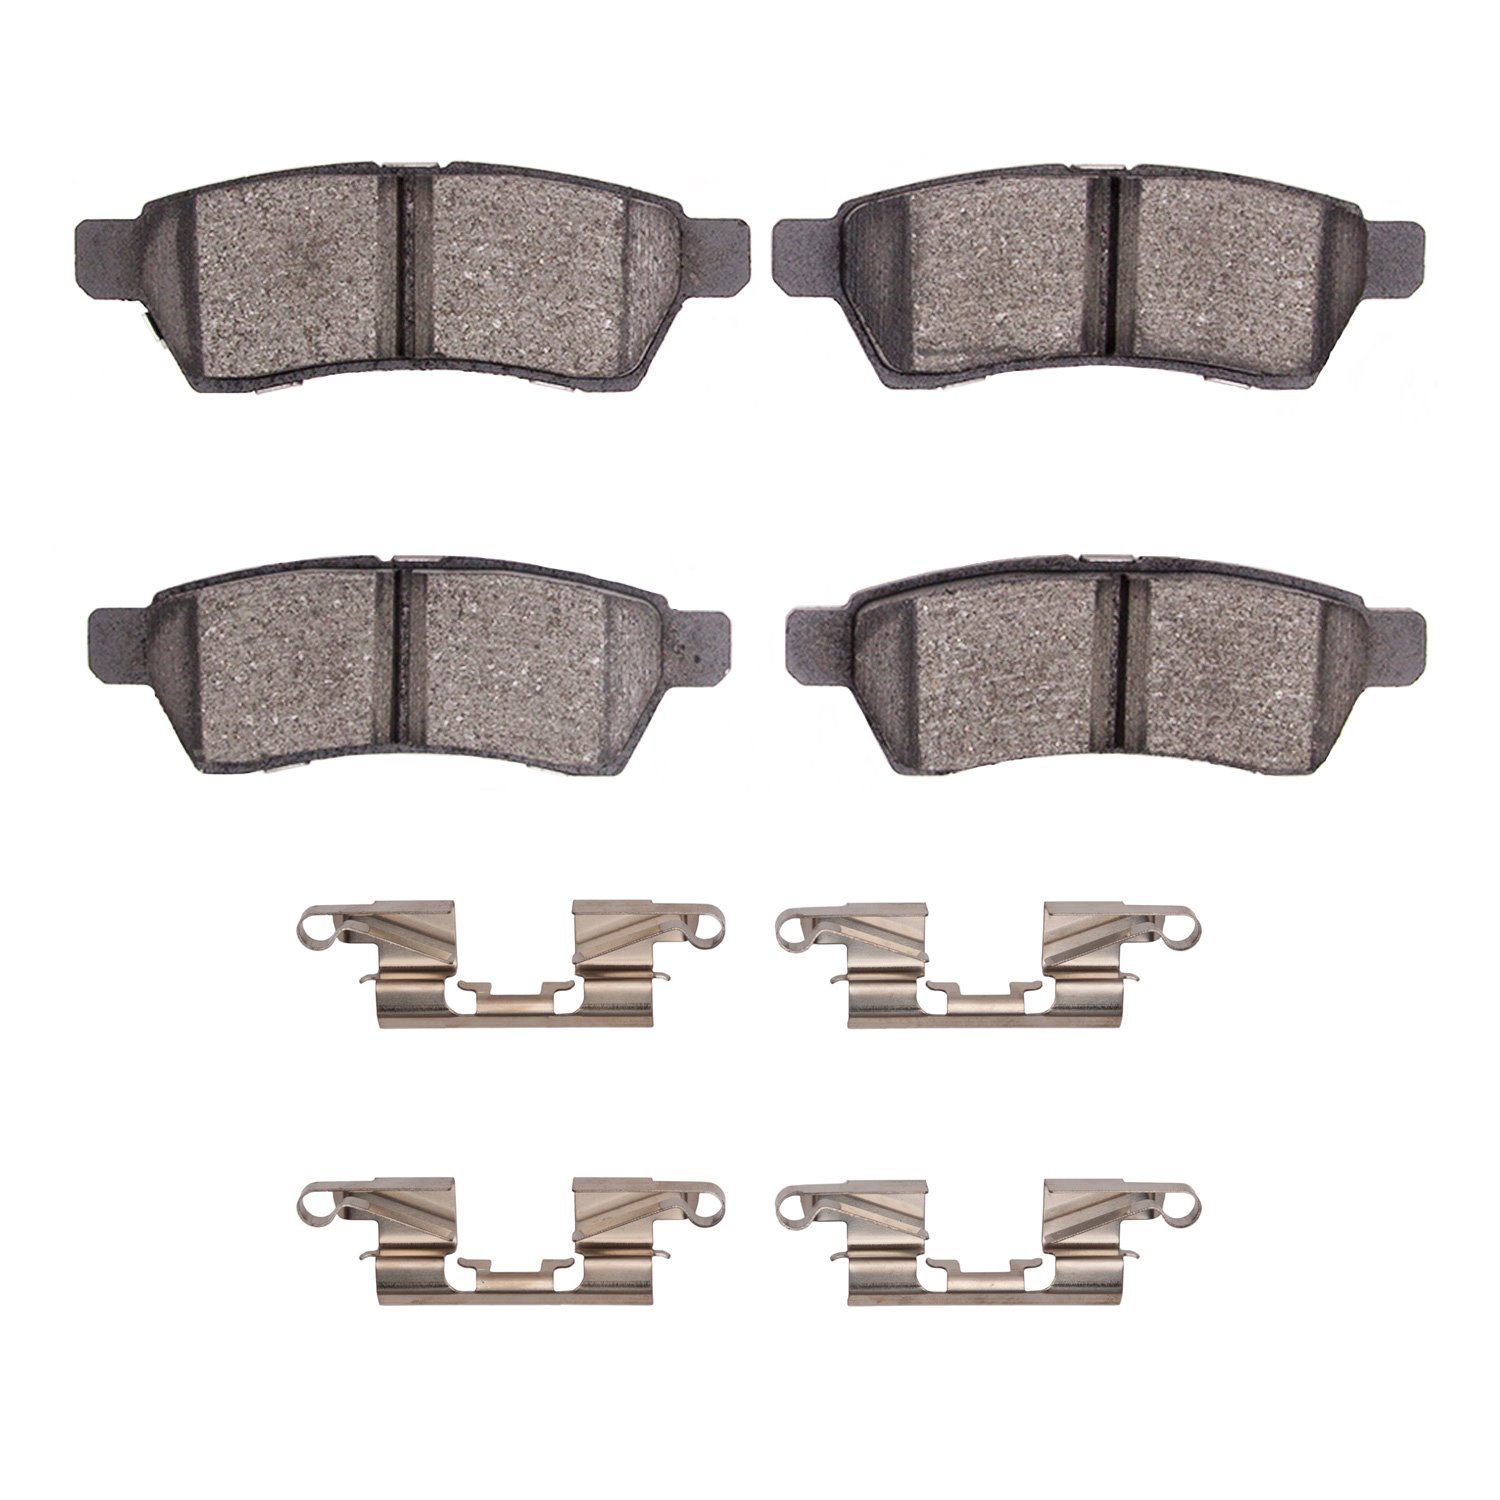 Ceramic Brake Pads & Hardware Kit, Fits Select Fits Multiple Makes/Models, Position: Rear